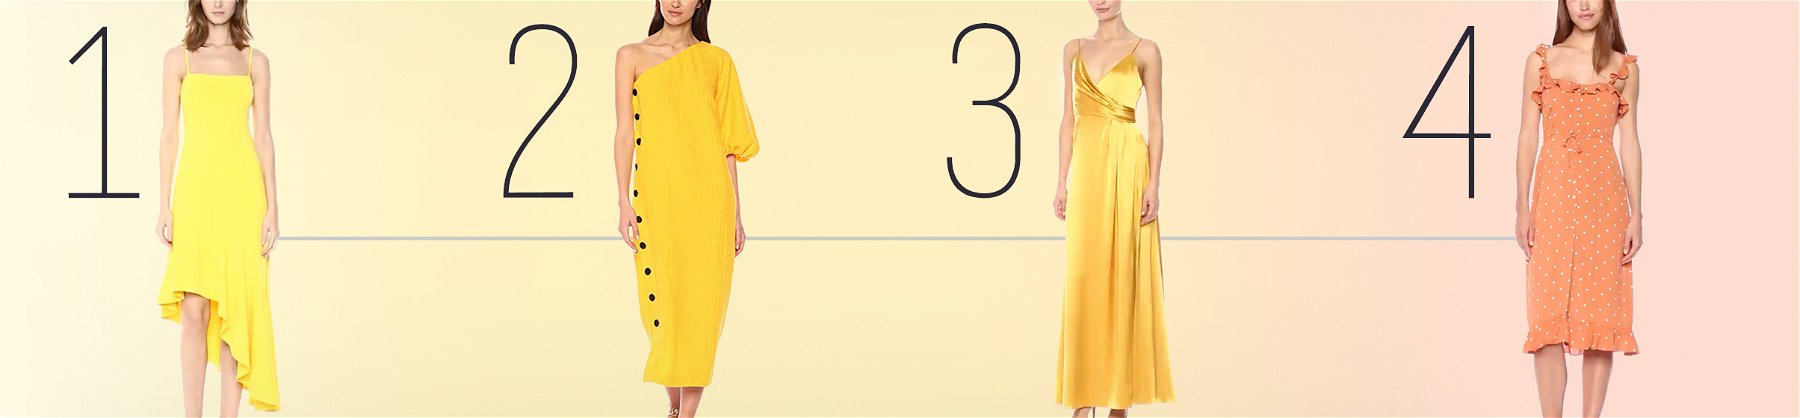 Blair Eadie Atlantic-Pacific Amazon Fashion The best bright dresses for summer